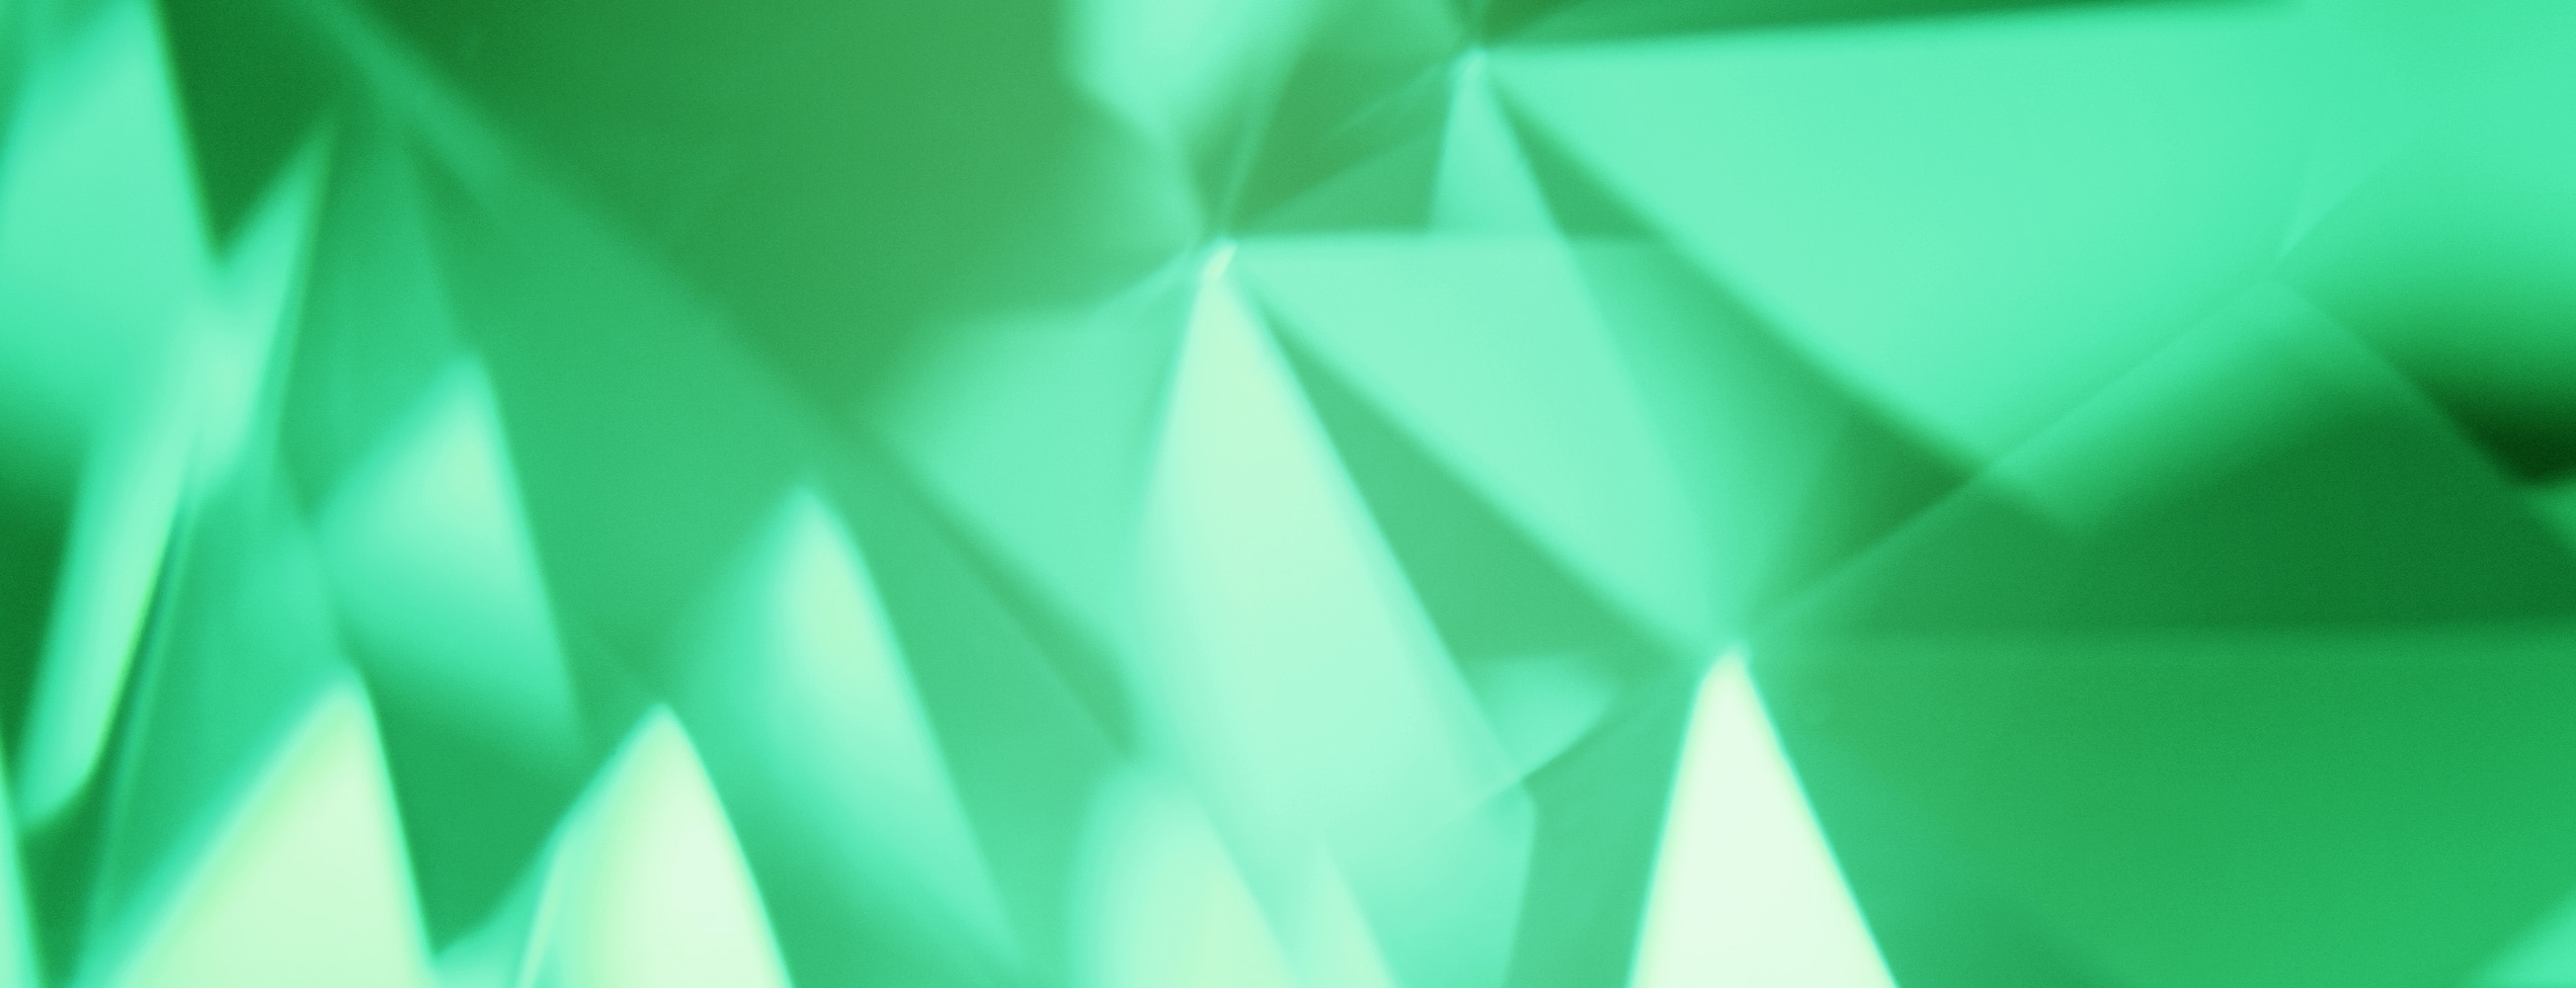 Green gem background